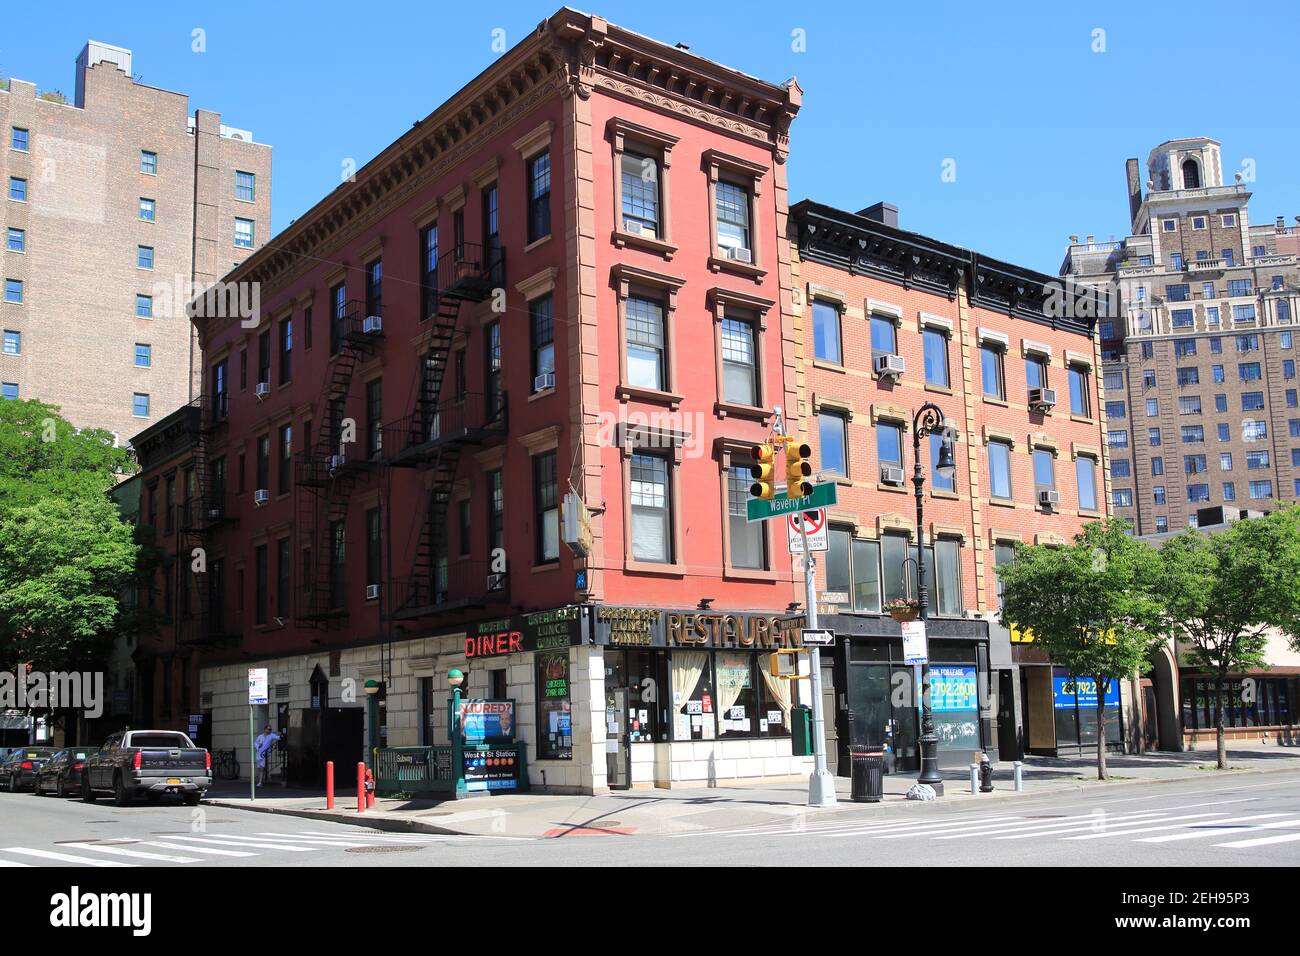 Waverly Place, Diner, Greenwich Village, Manhattan, New York City, USA Stock Photo